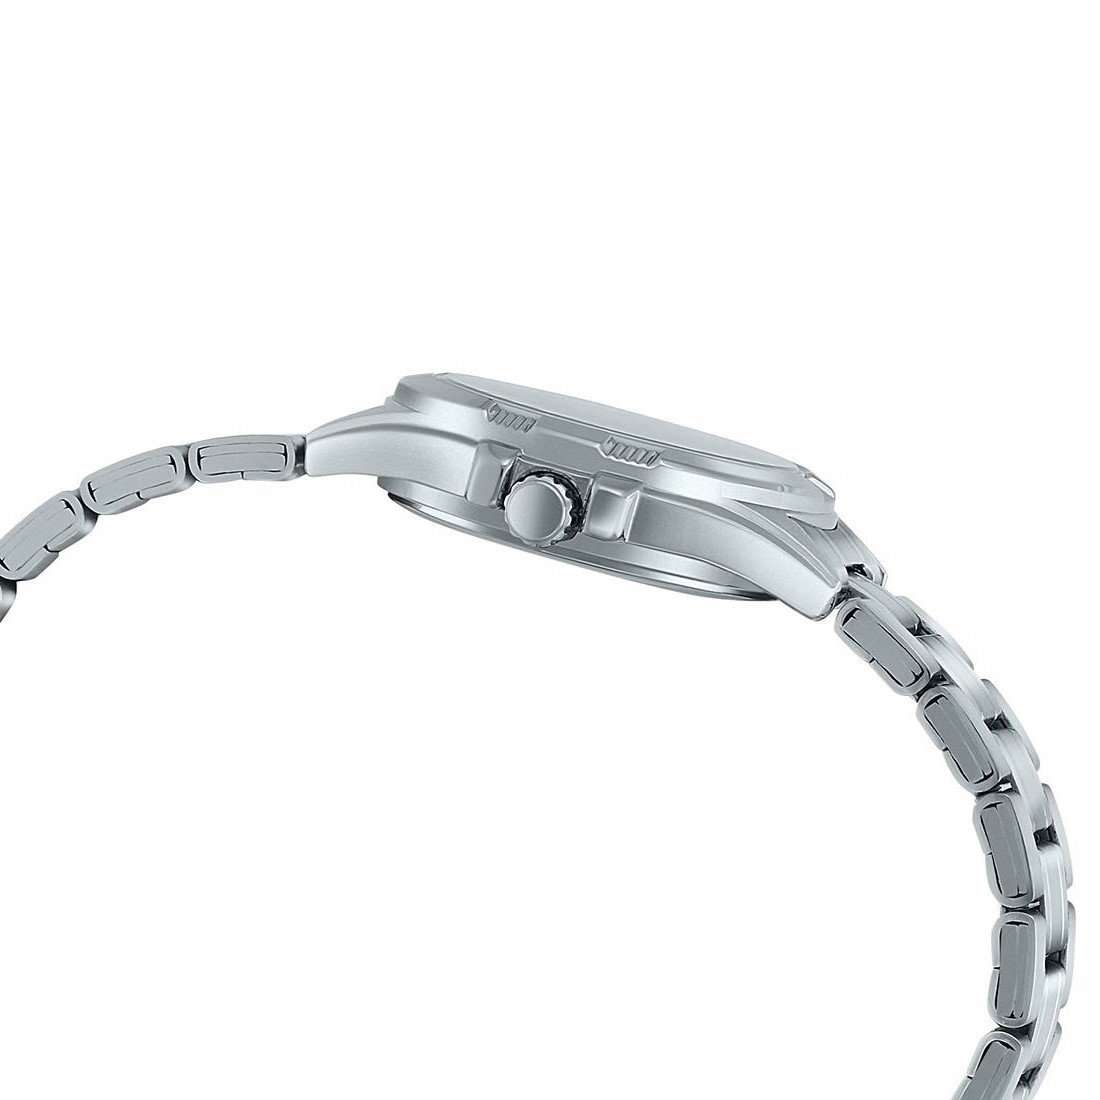 Casio LTP-1308D-4AVDF Silver Stainless Steel Strap Watch for Women-Watch Portal Philippines